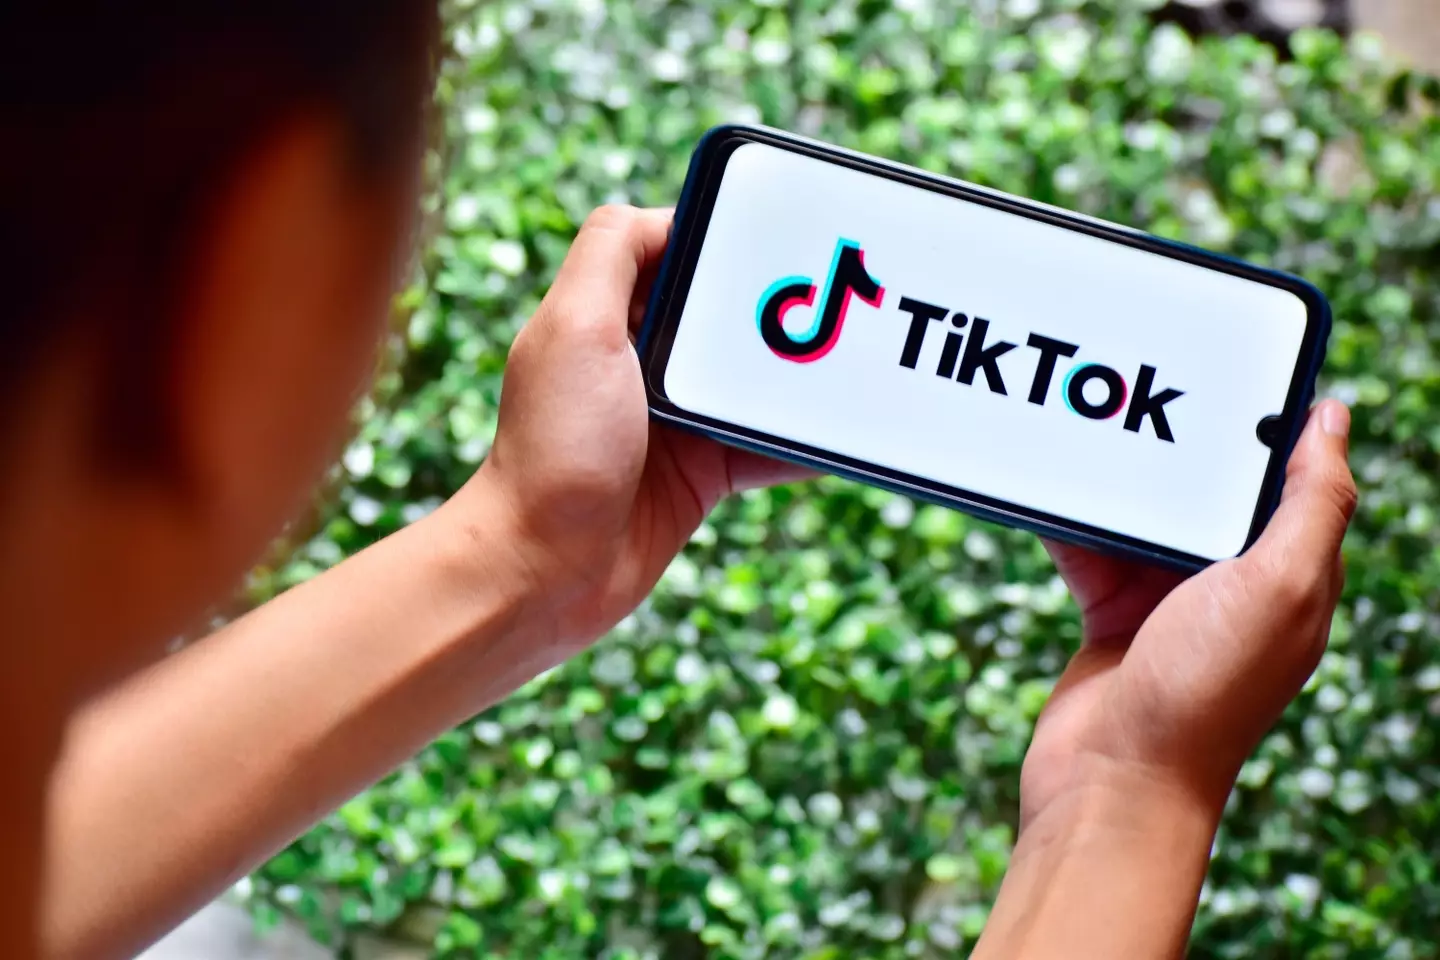 US law enforcement agencies have expressed concern about TikTok.